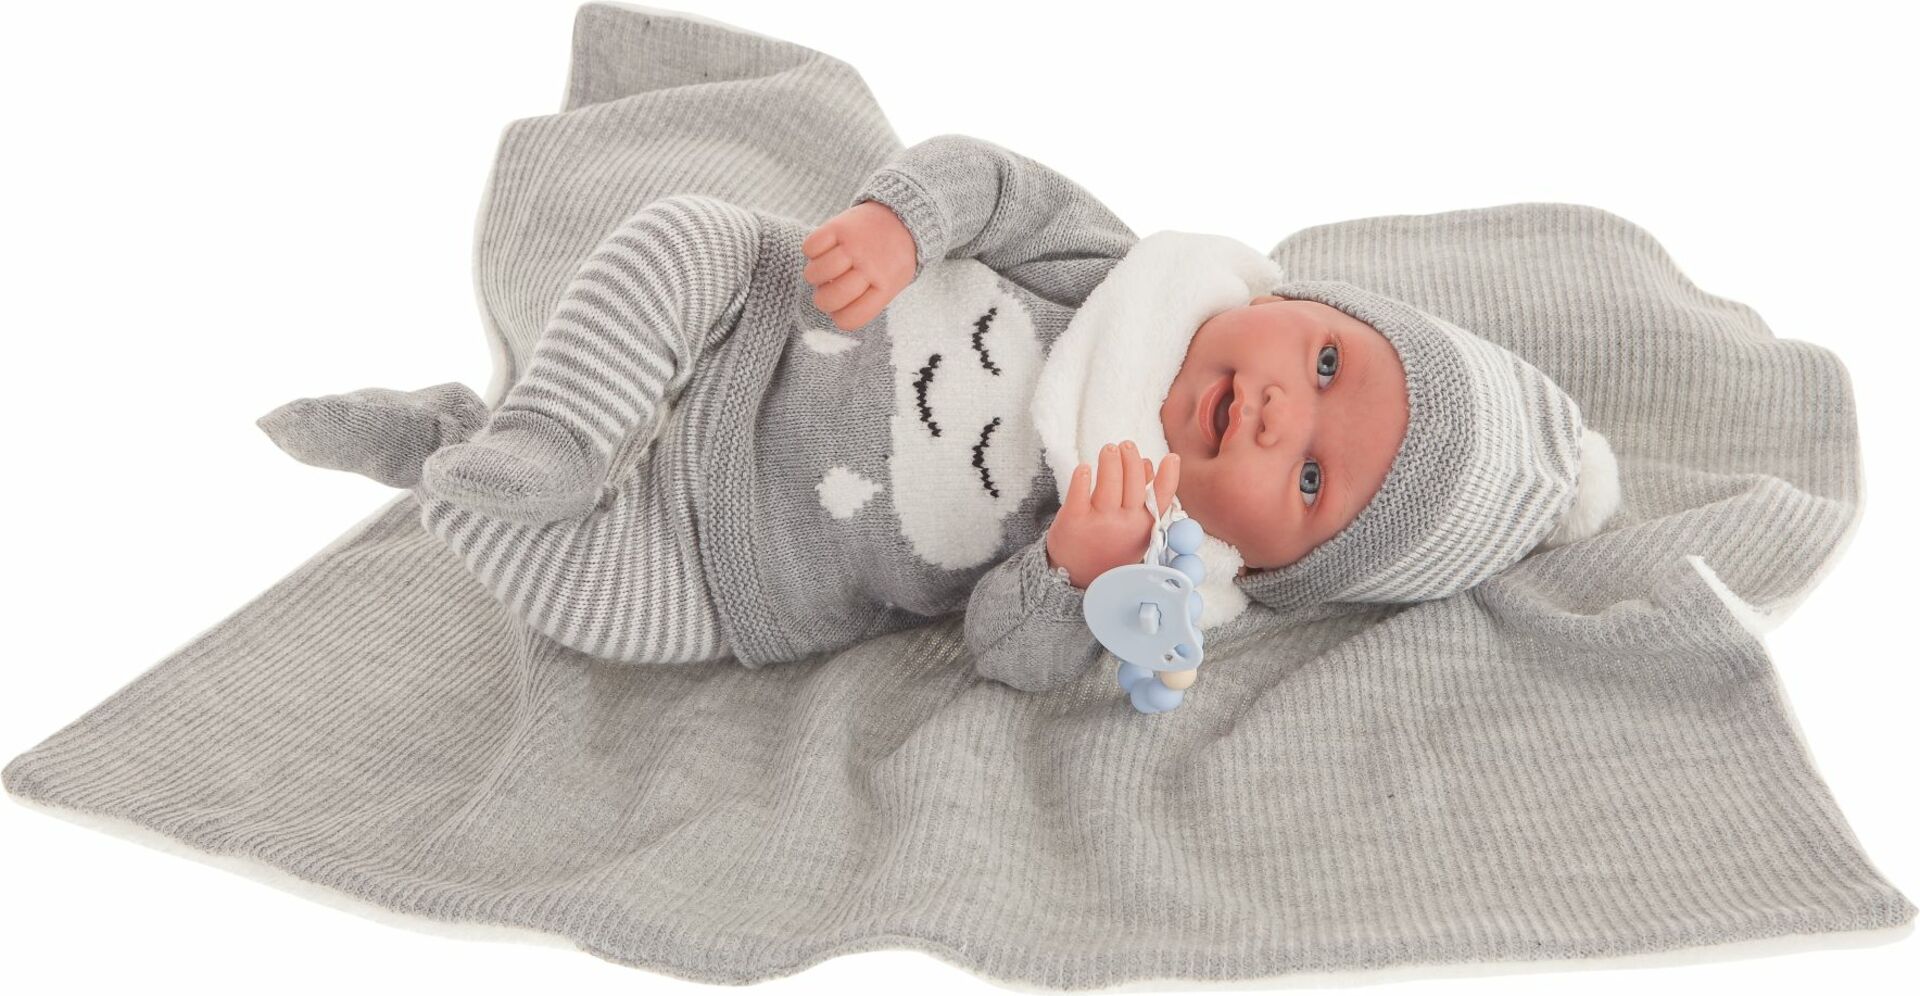 Antonio Juan 80114 SWEET REBORN PIPO - realistická panenka miminko s měkkým látkovým tělem